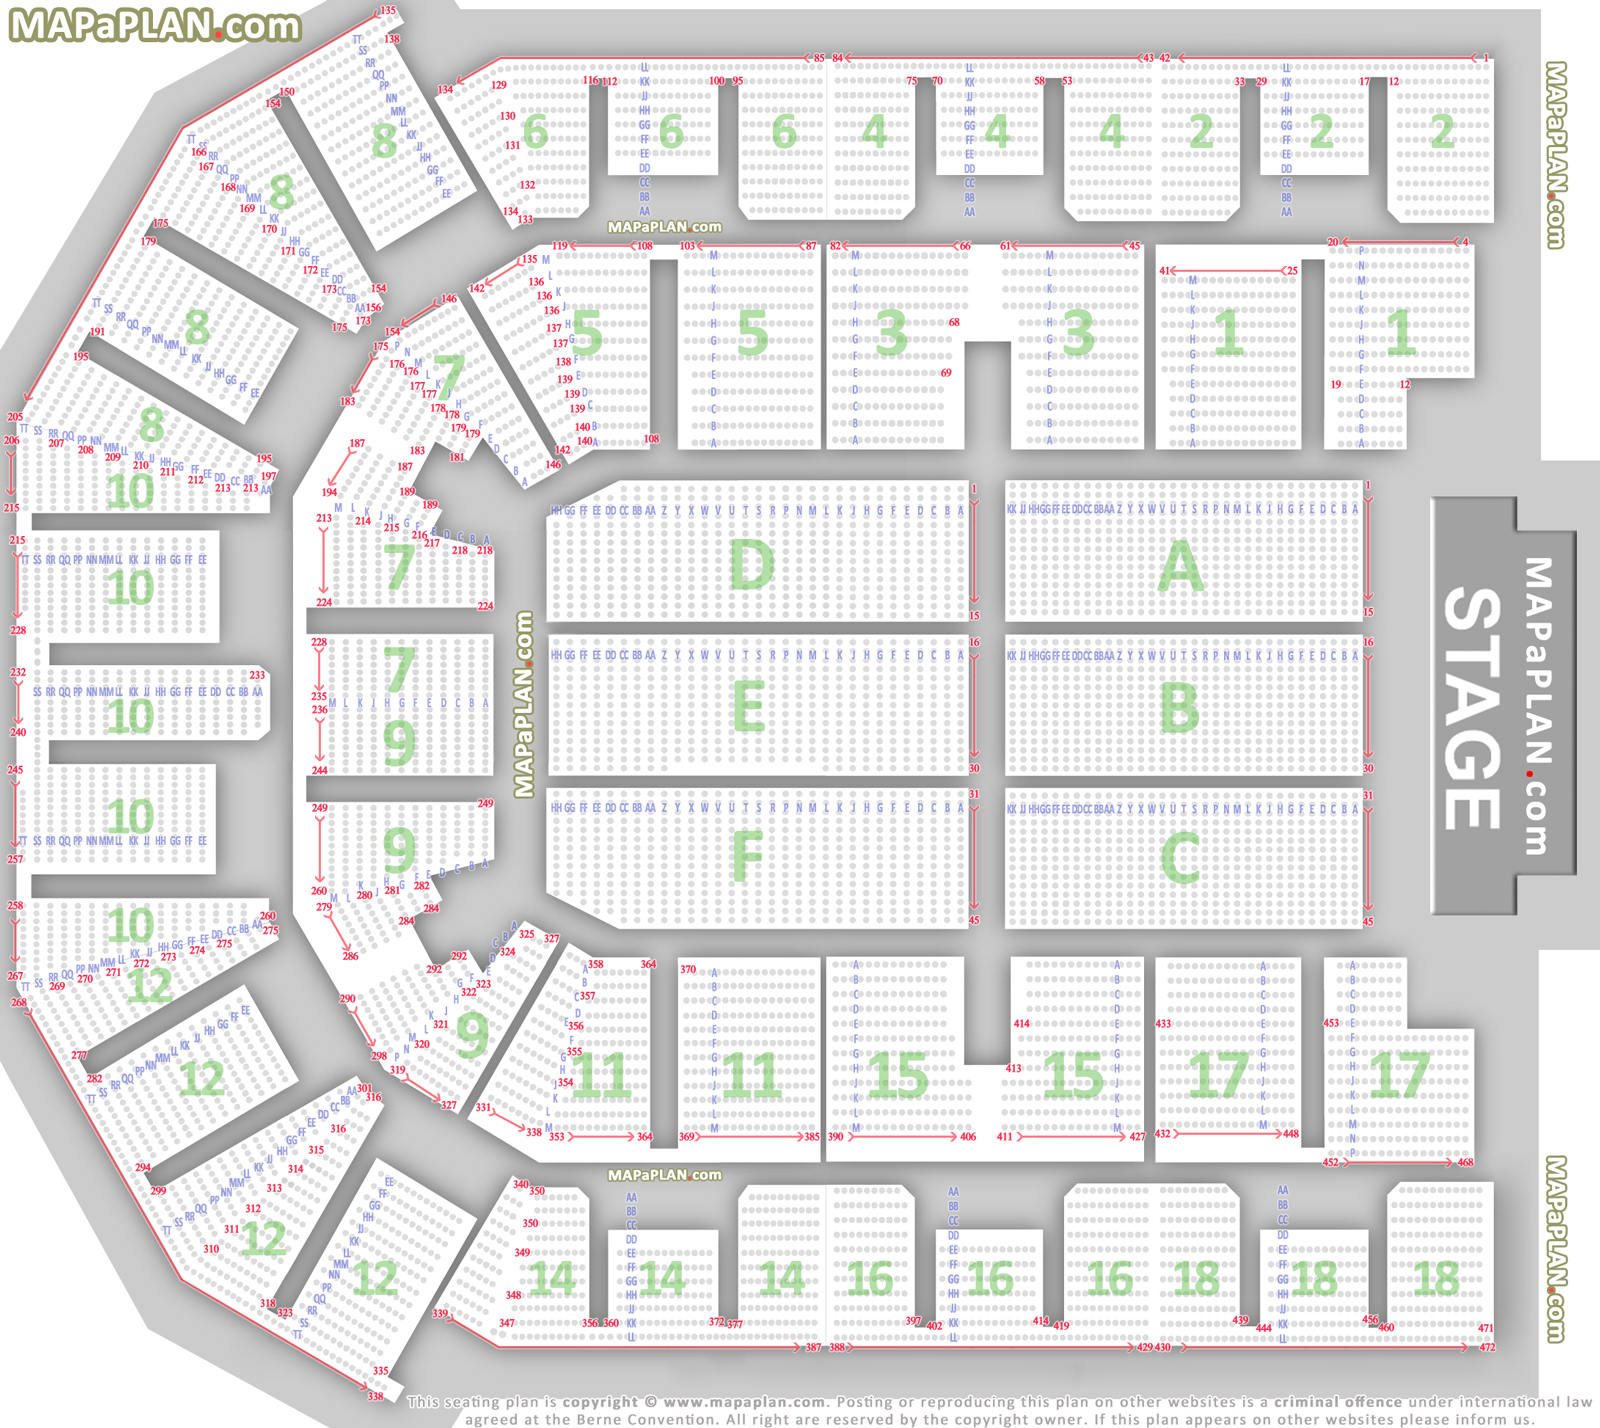 Barclaycard Arena Seating Plan Birmingham Cardbk.co